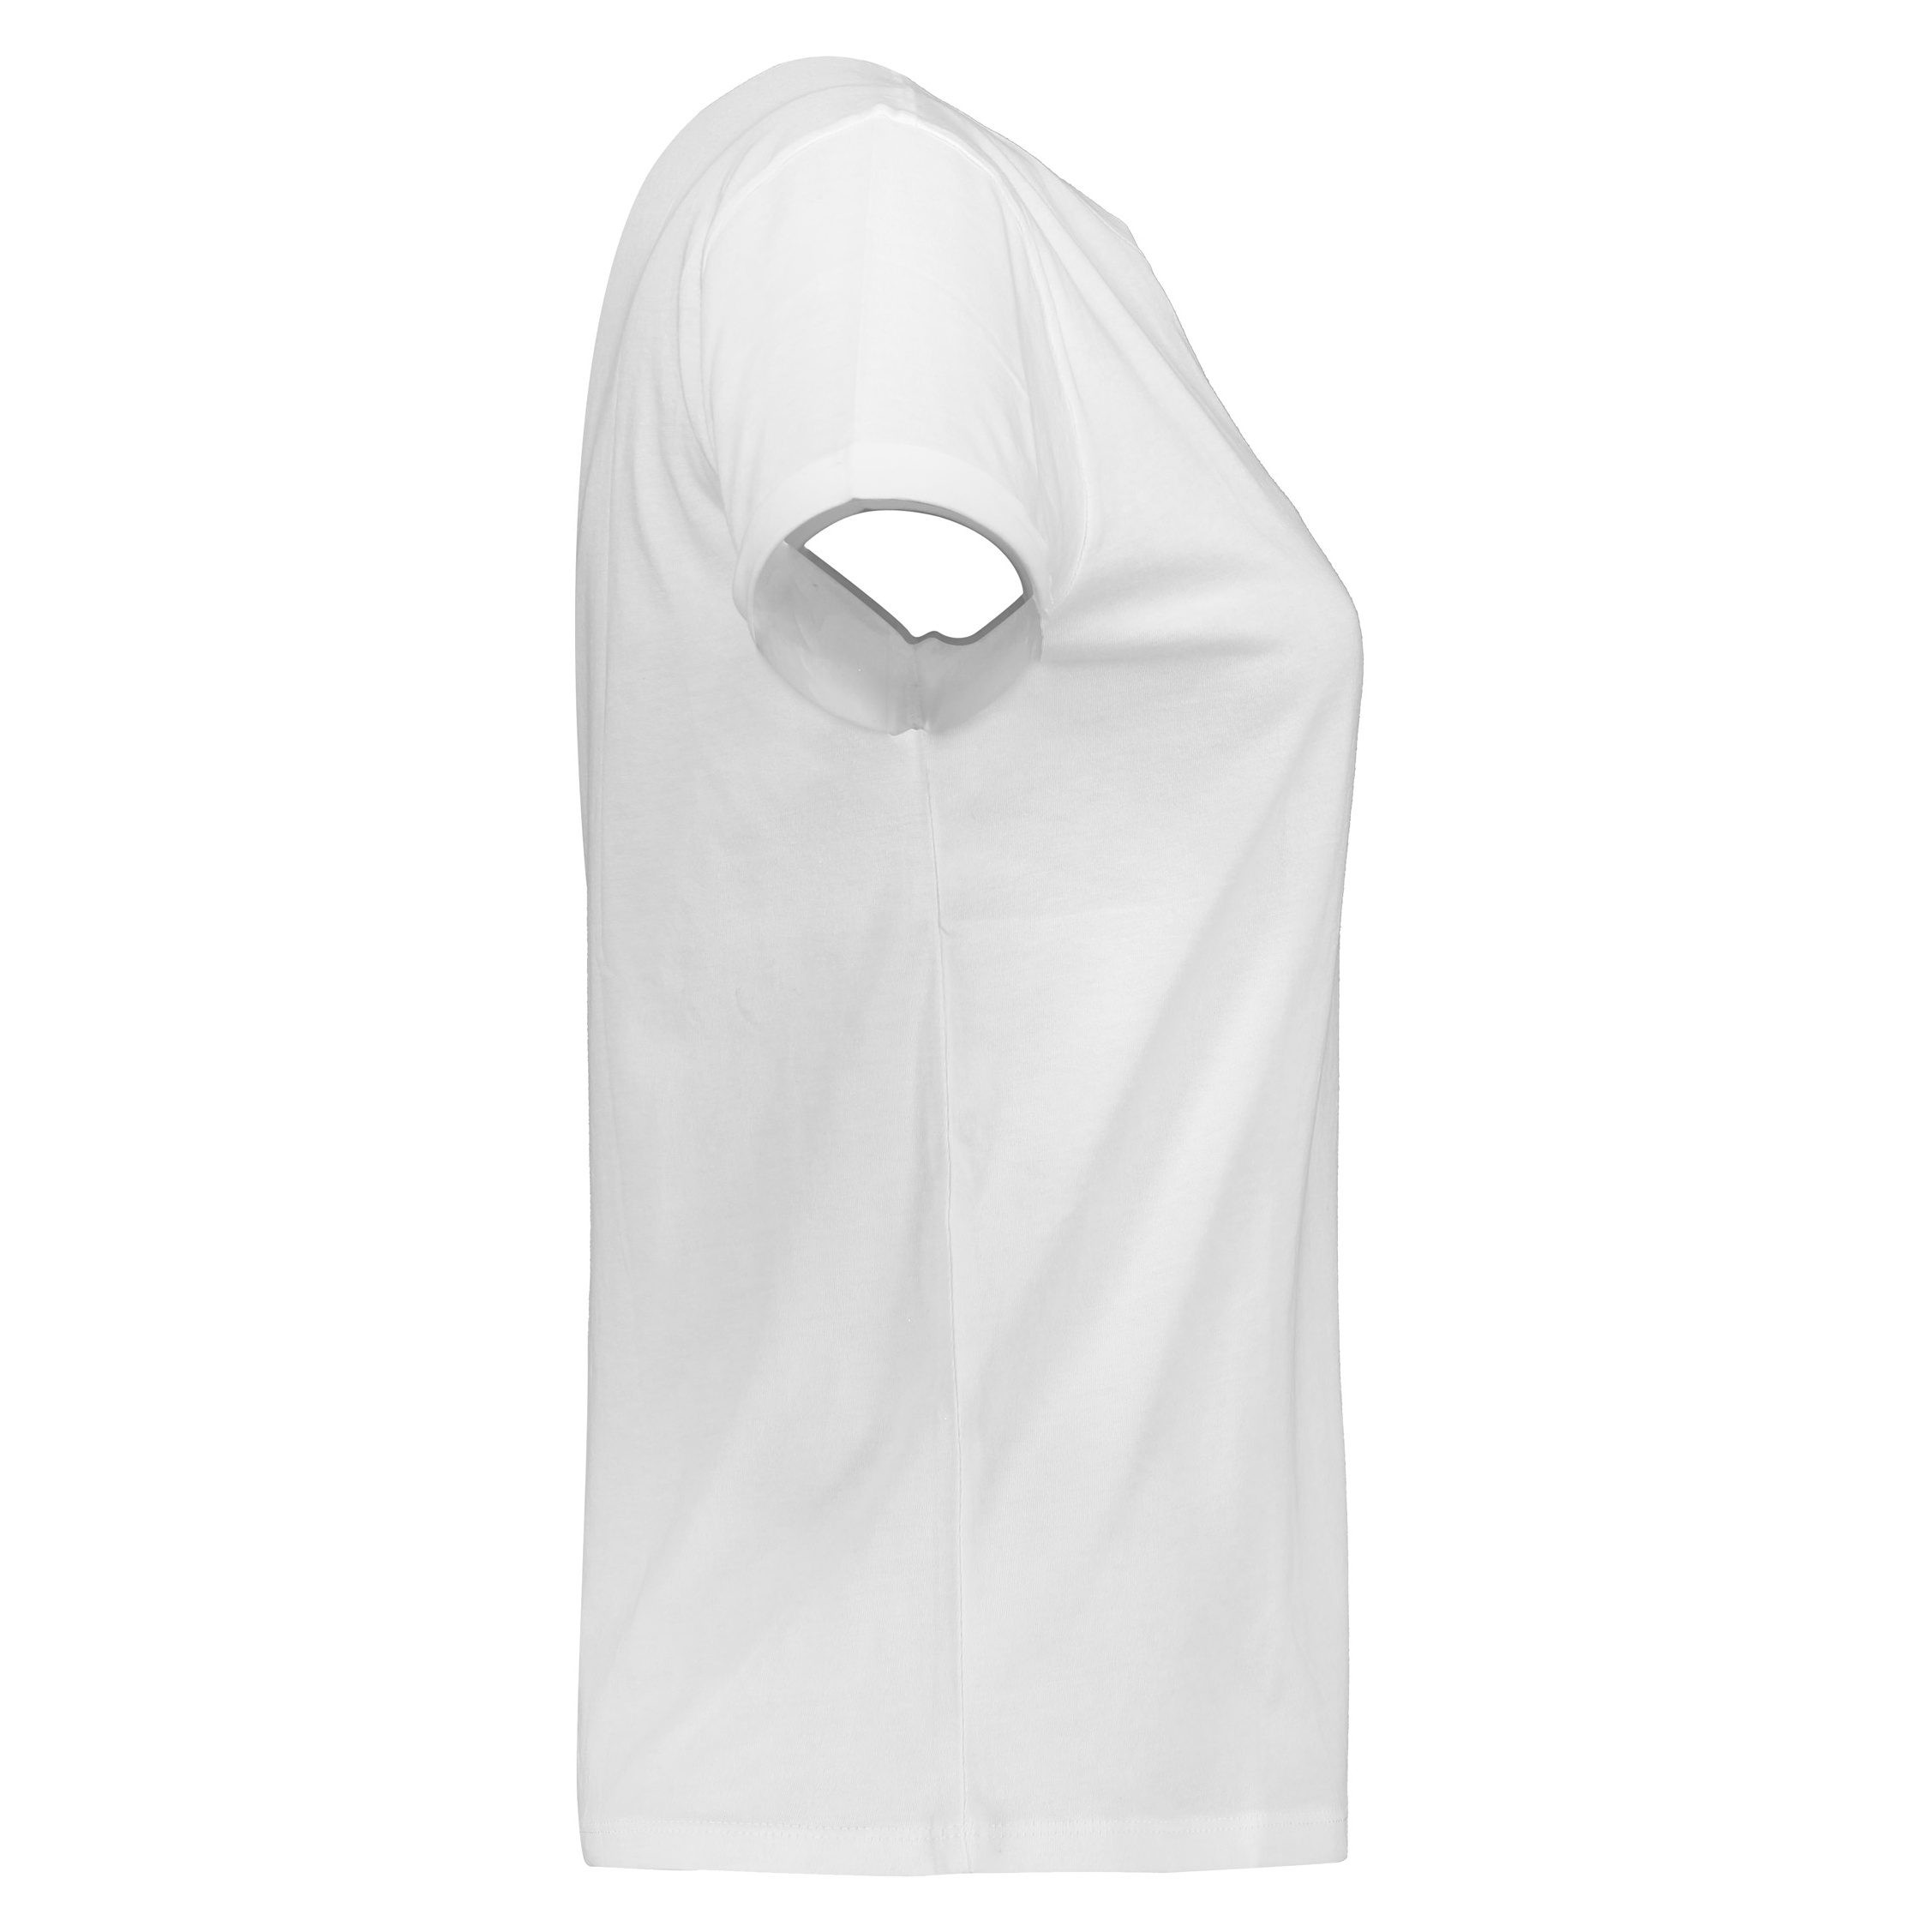 تی شرت نه کالینز مدل CL1032384-WHITE